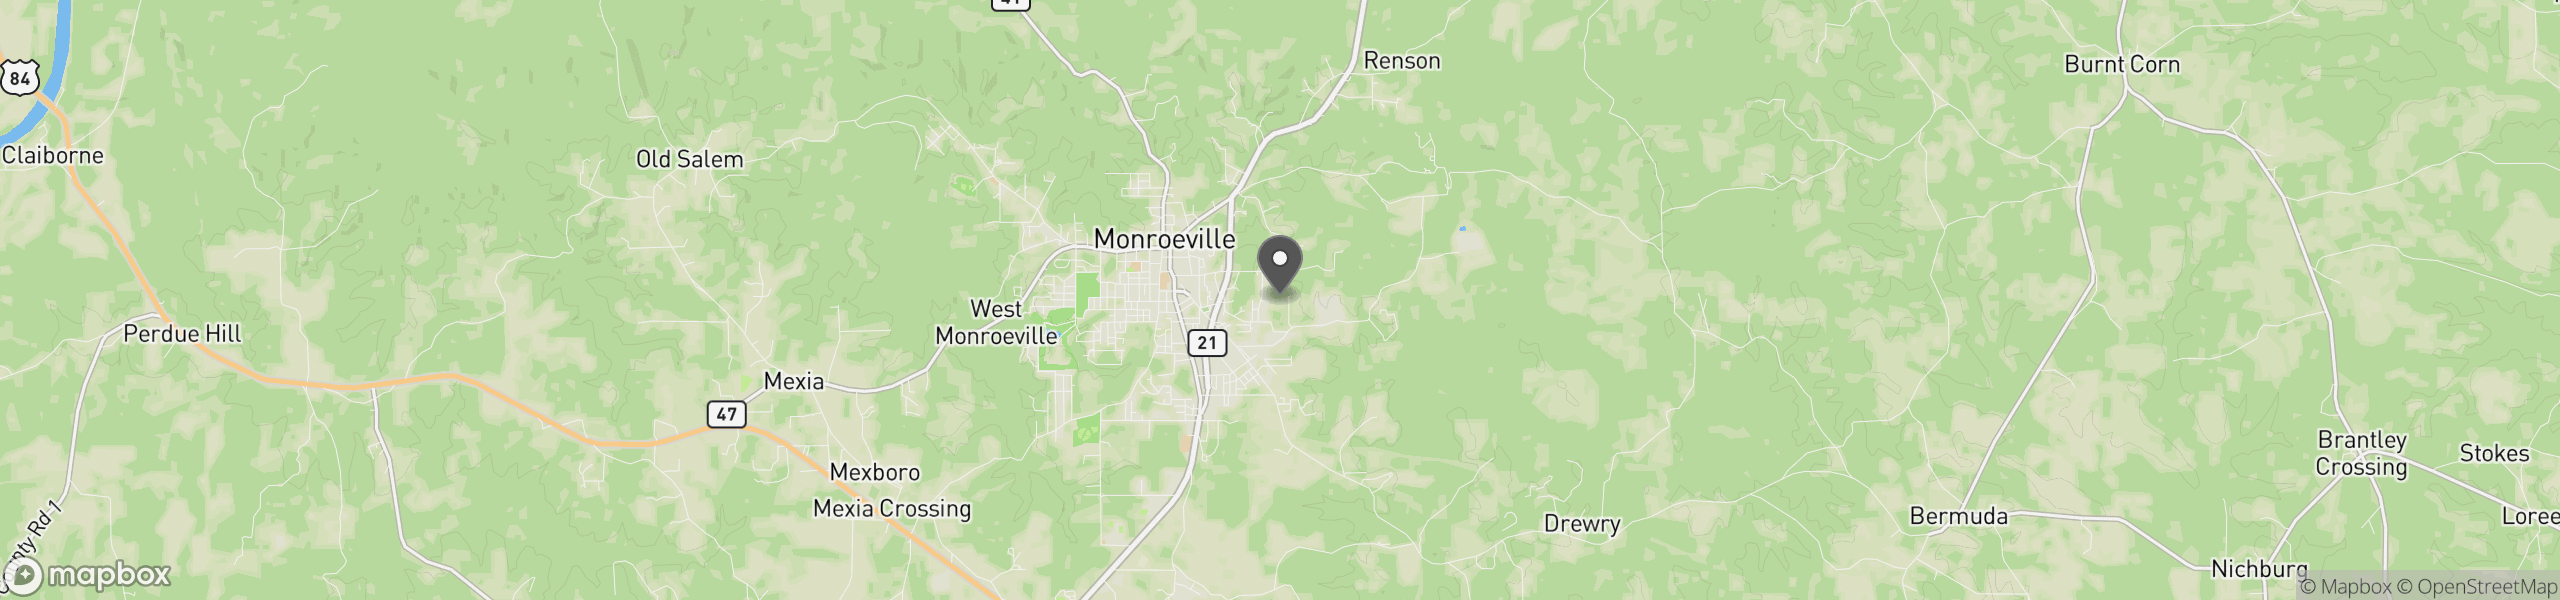 Monroeville, AL 36460